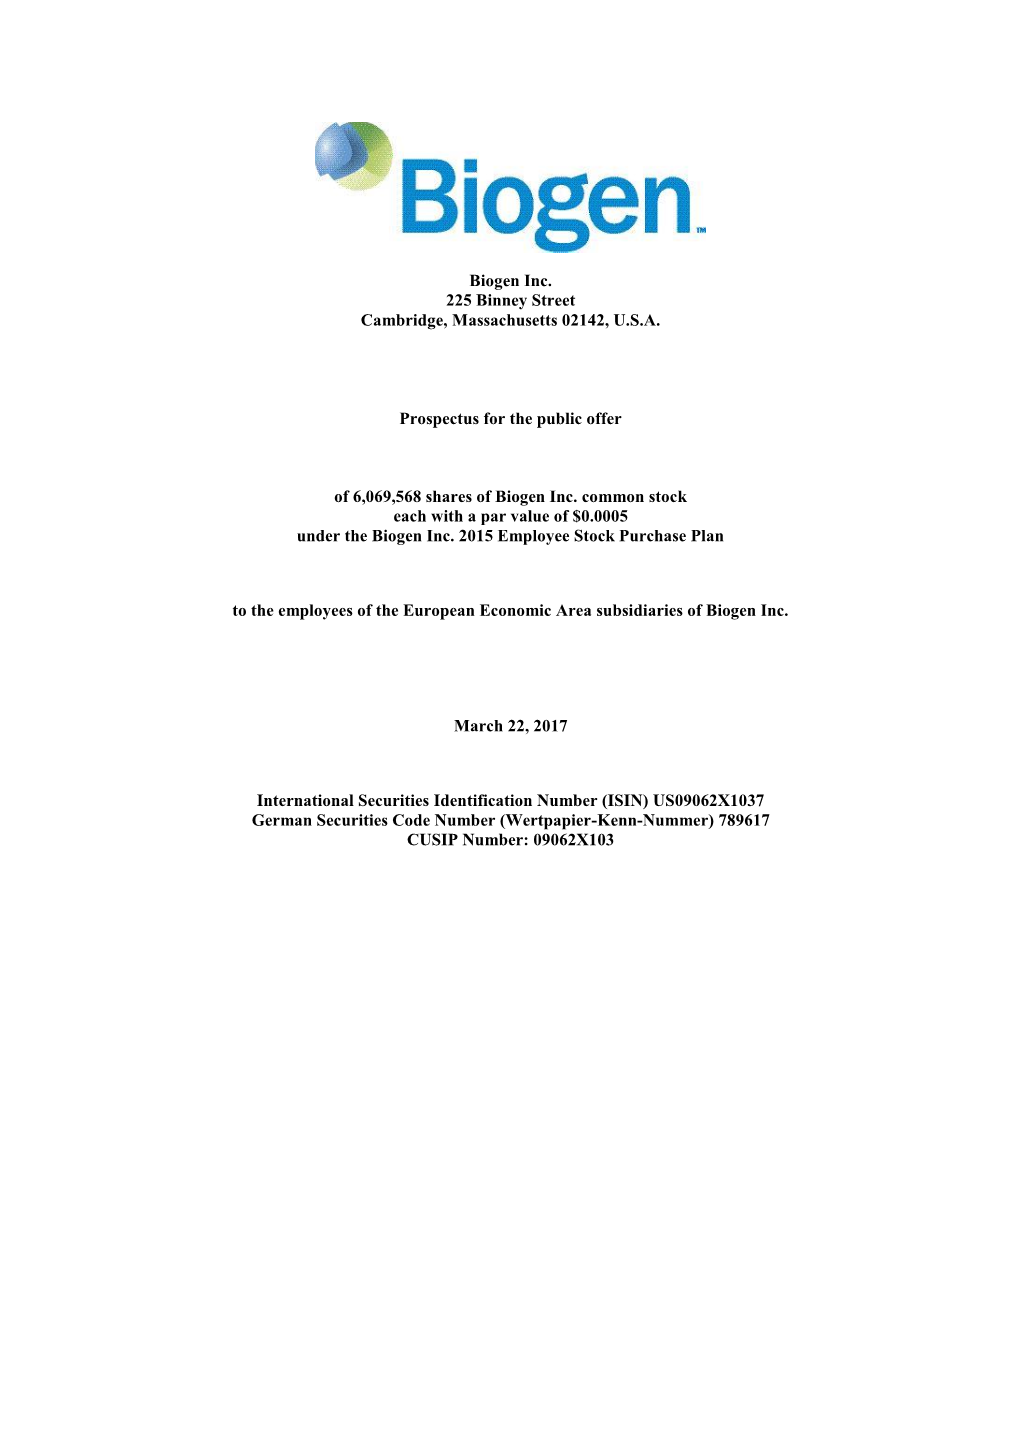 Biogen Inc. 225 Binney Street Cambridge, Massachusetts 02142, U.S.A. Prospectus for the Public Offer of 6,069,568 Shares Of